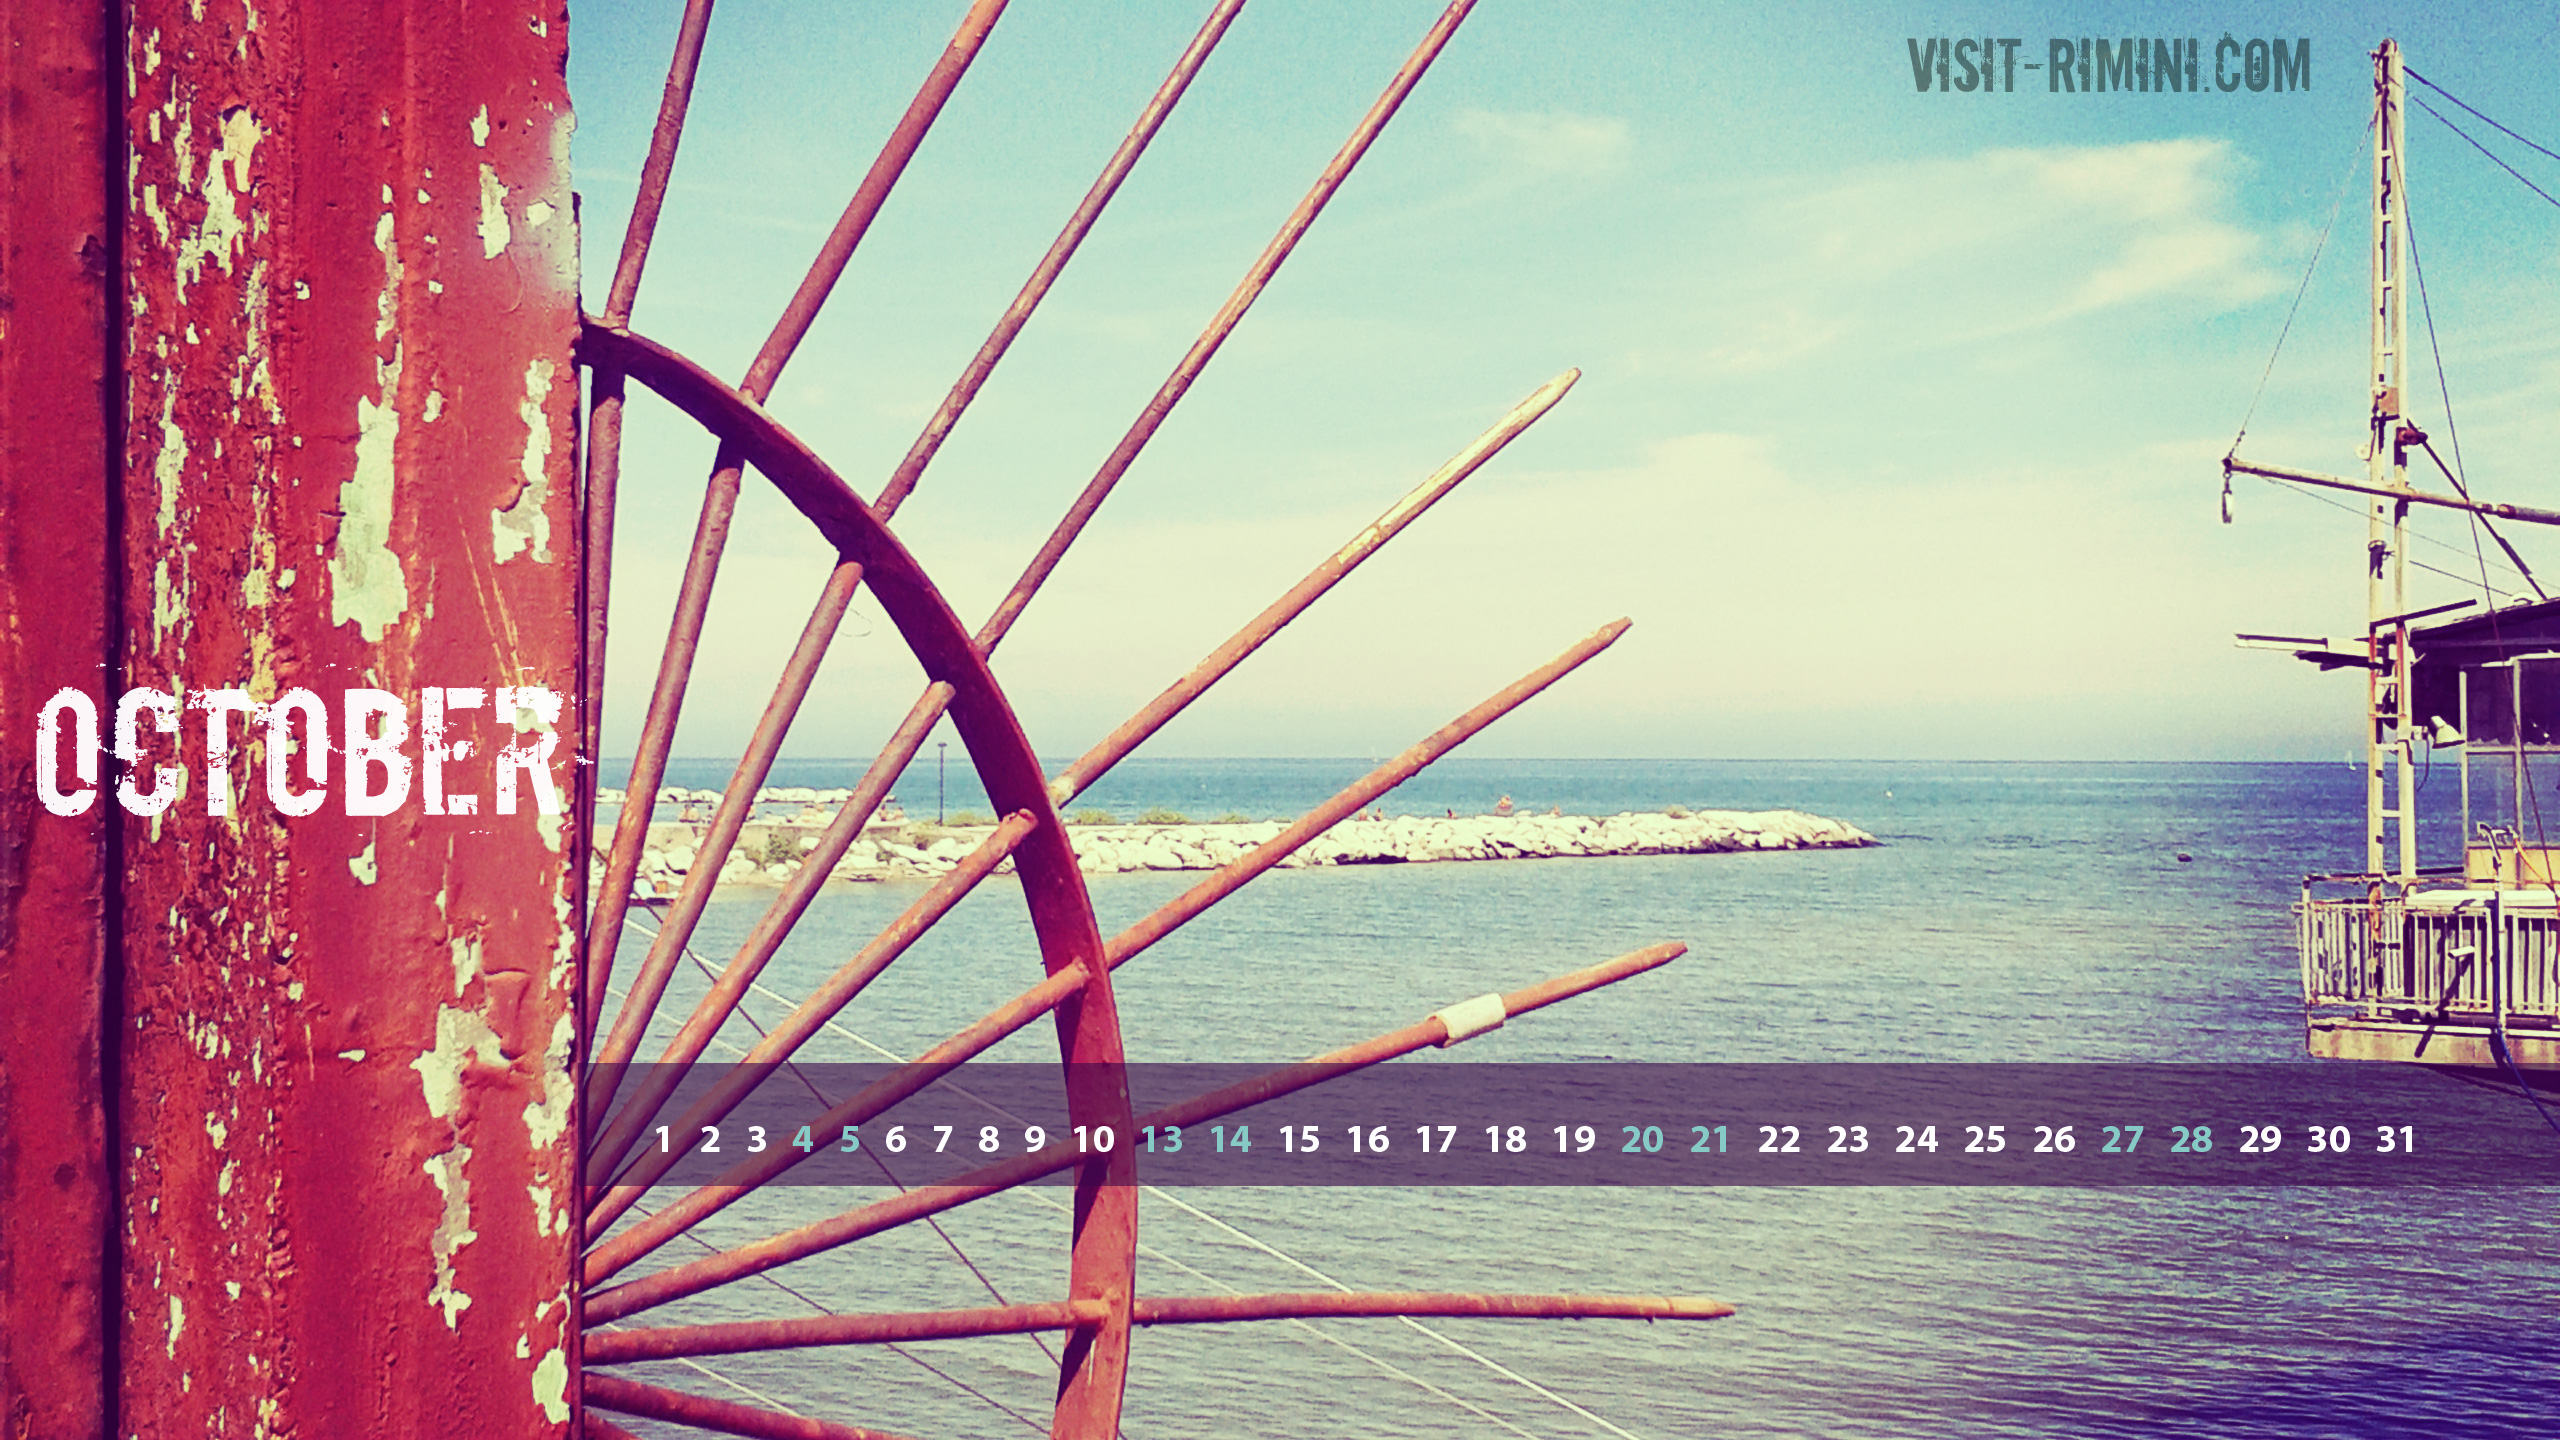 Rimini Seascape - a free desktop calendar for October 2014